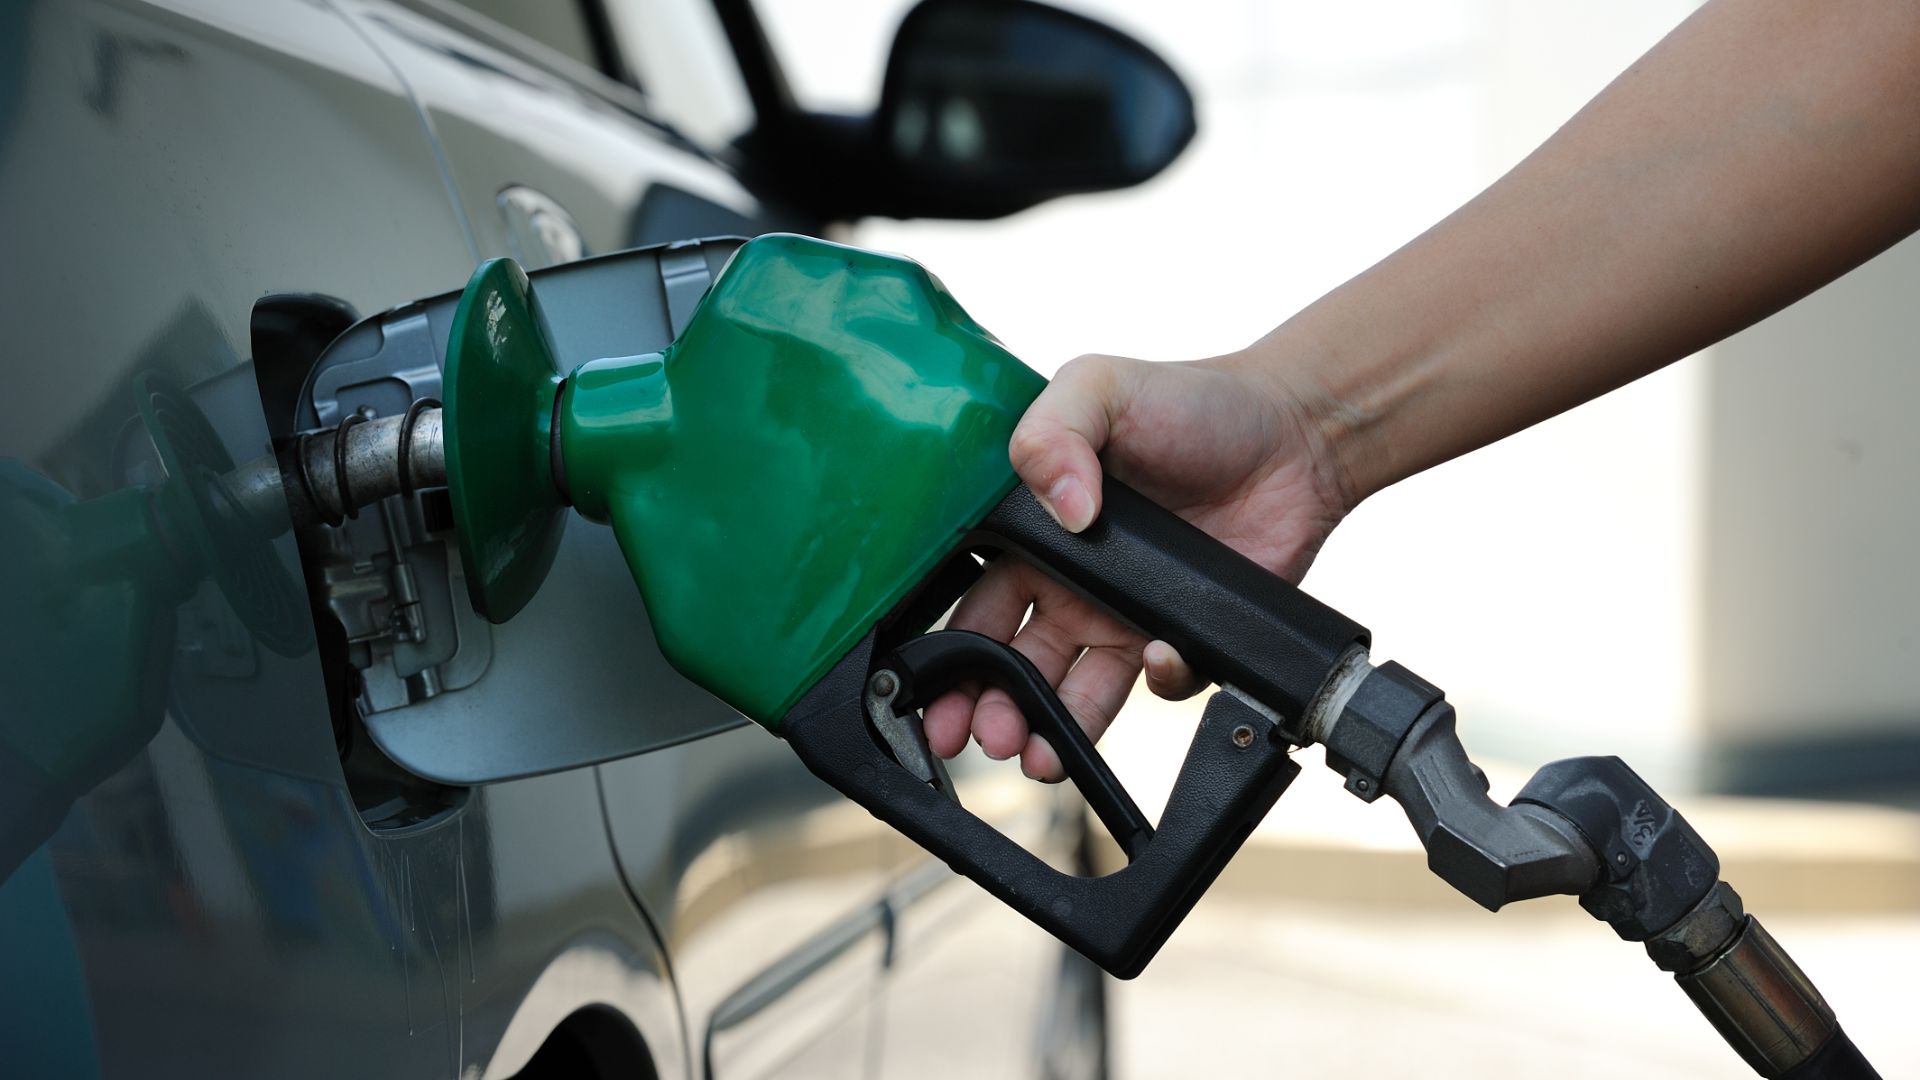 petrol pumps sexist, says London motorist